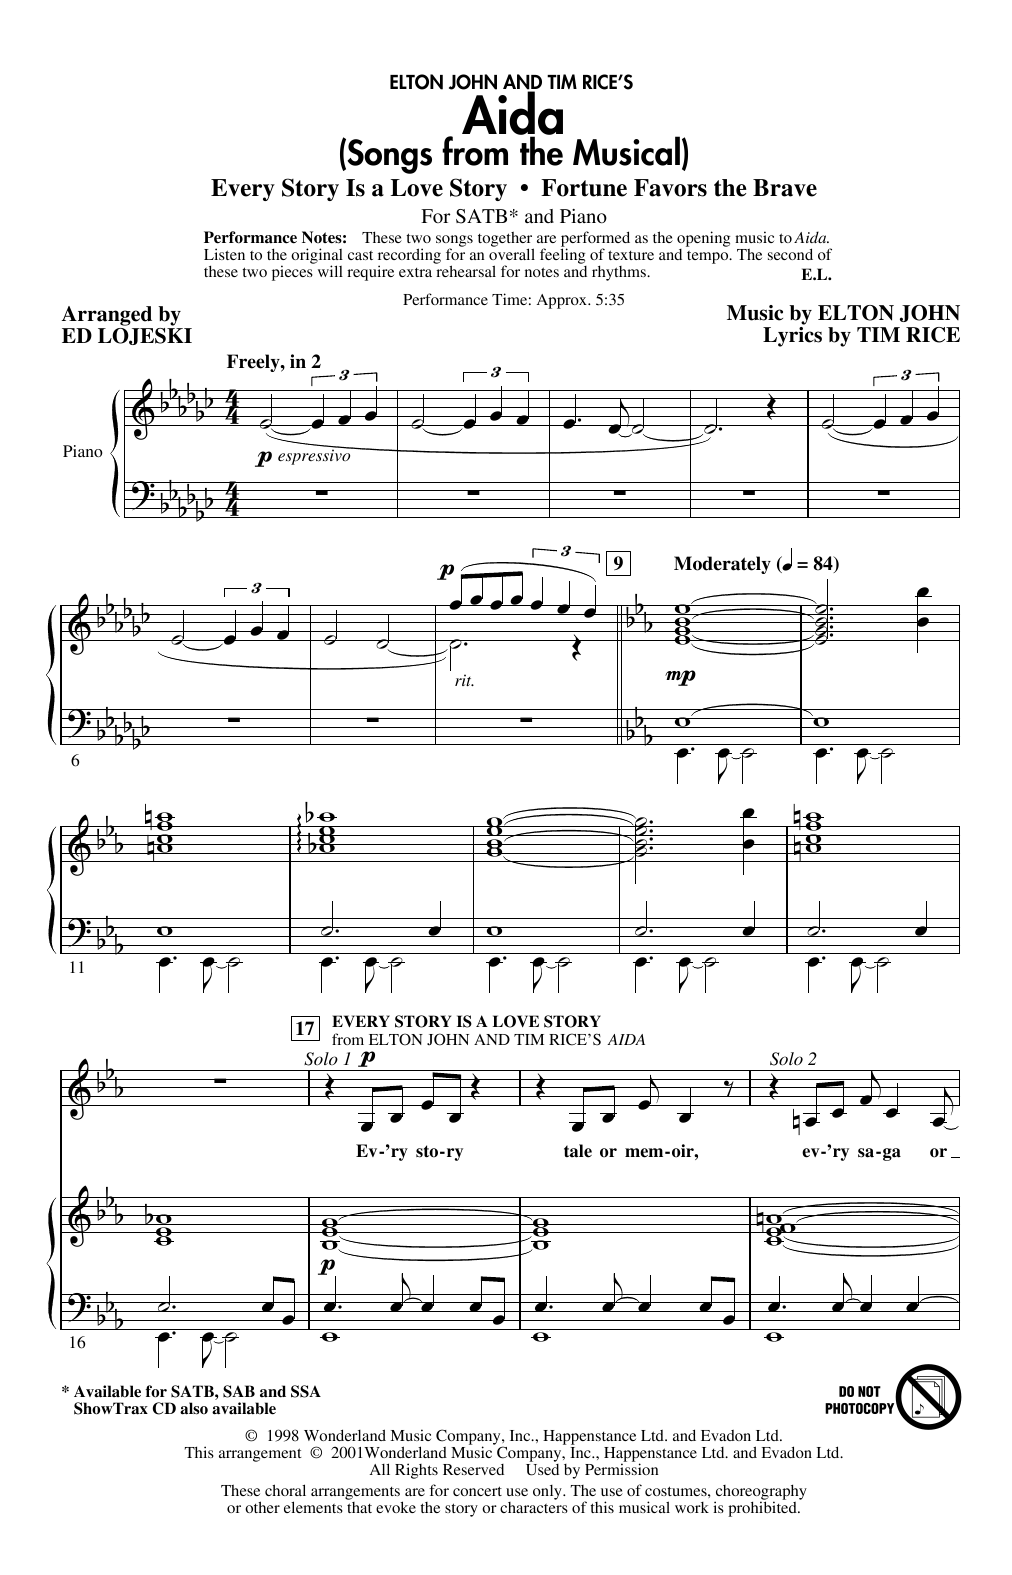 Elton John & Tim Rice Aida (Songs from the Musical) (arr. Ed Lojeski) Sheet Music Notes & Chords for SSA Choir - Download or Print PDF